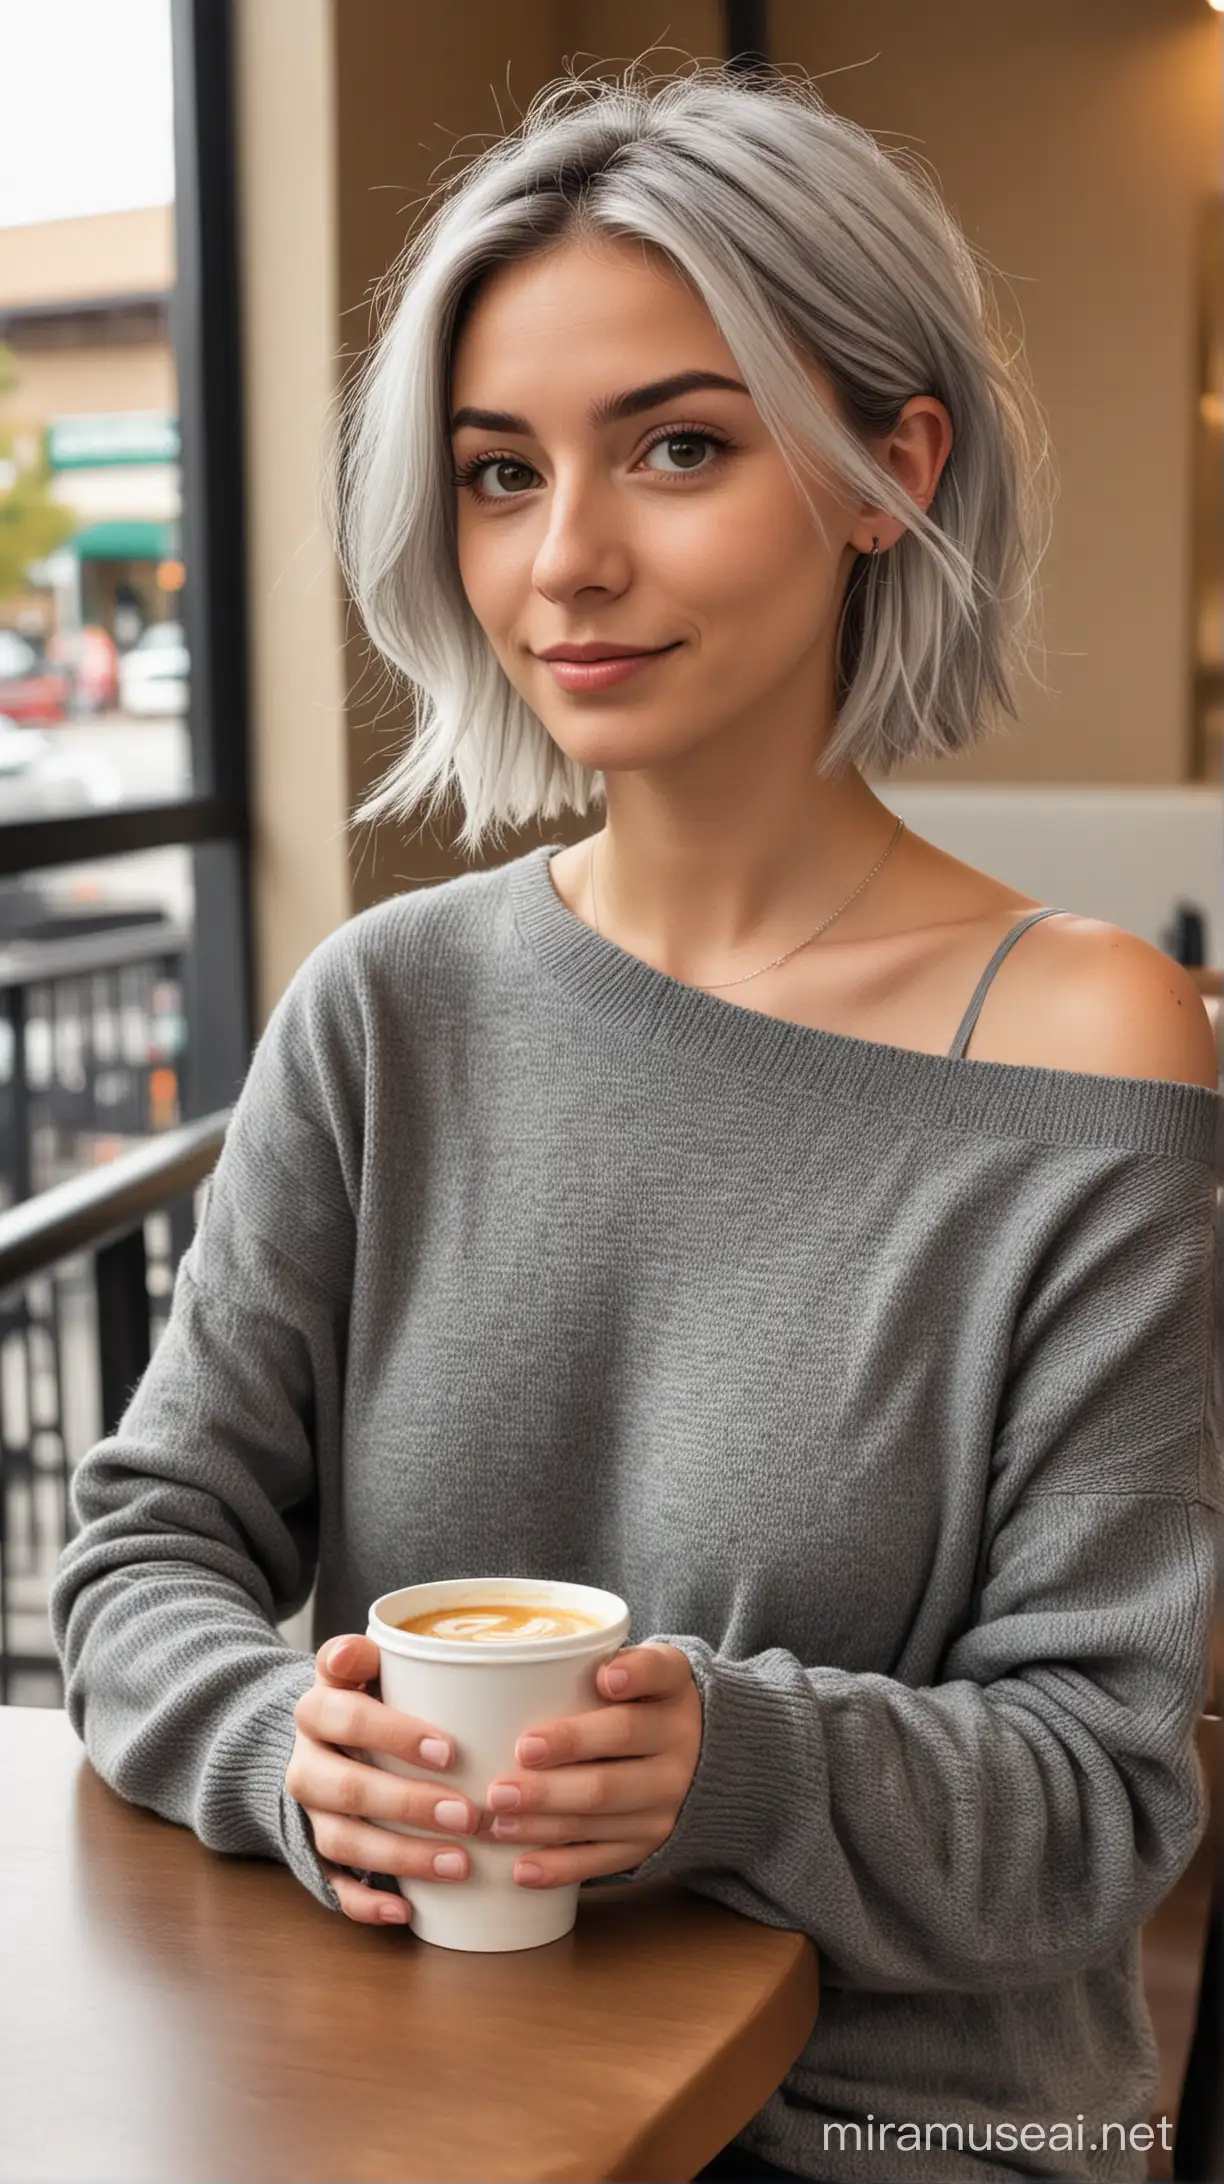 Stylish Young Woman Enjoying Coffee at Starbucks